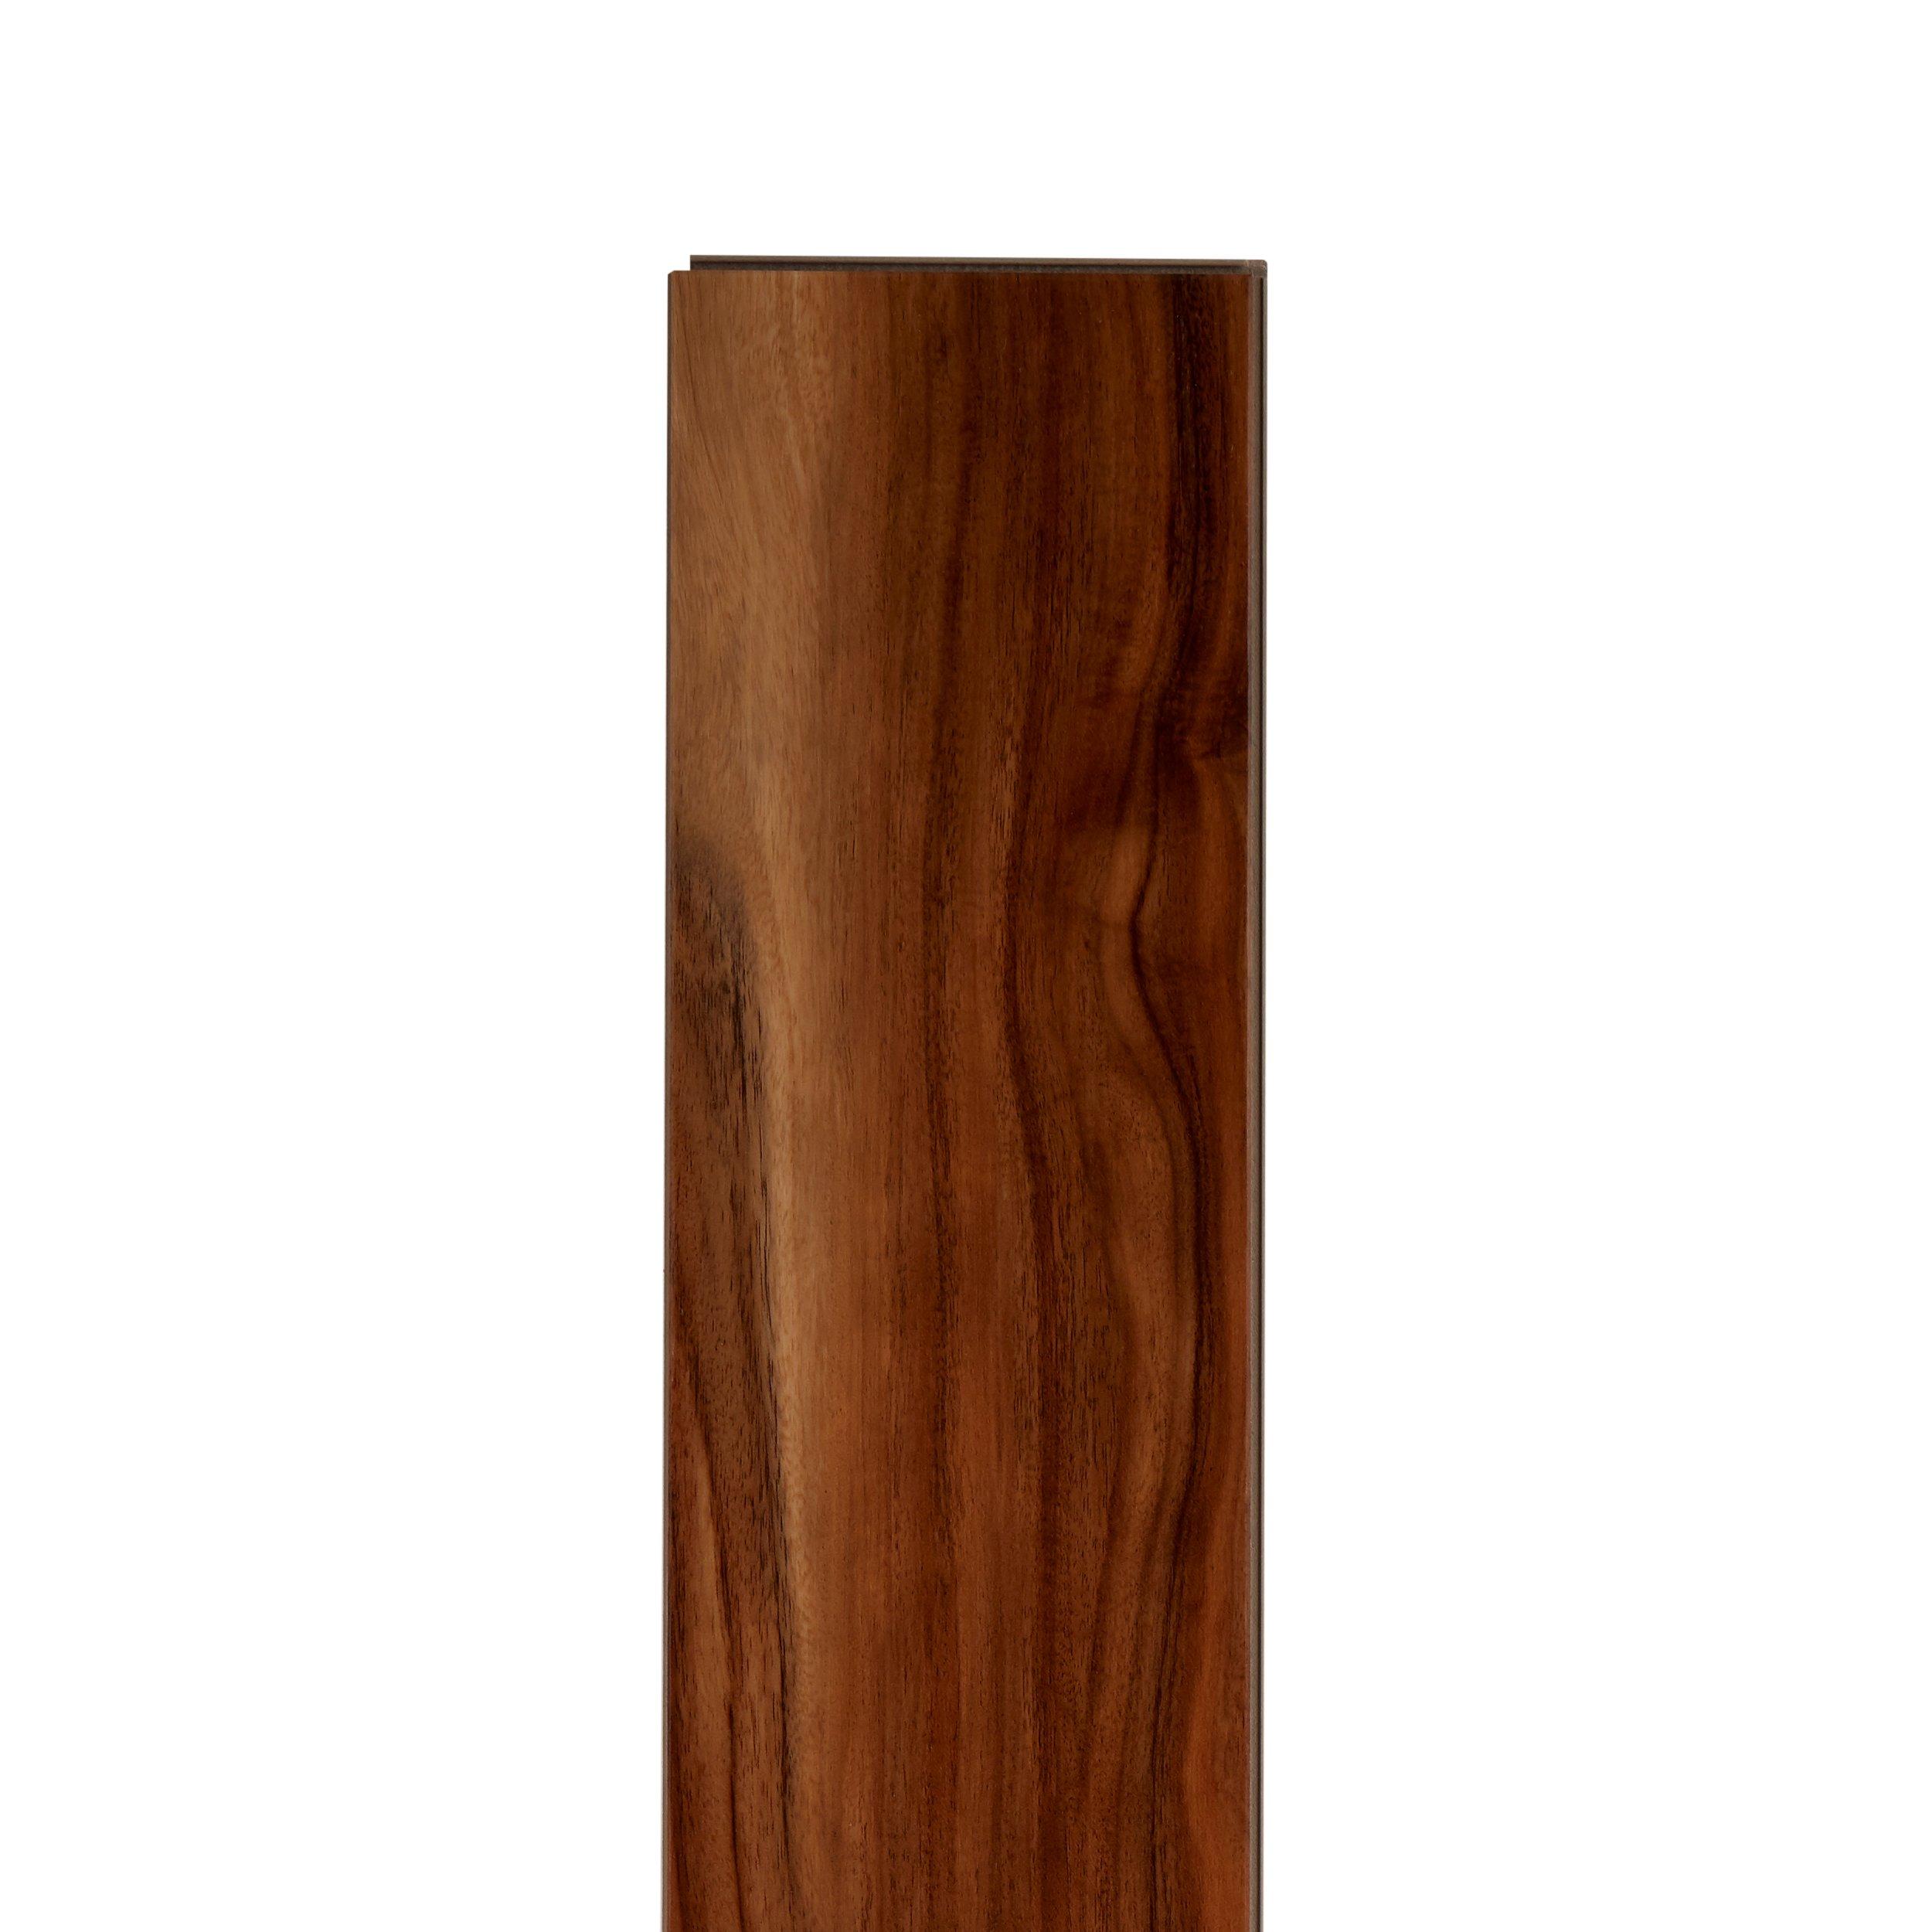 Acacia High Gloss Rigid Core Luxury Vinyl Plank - Cork Back